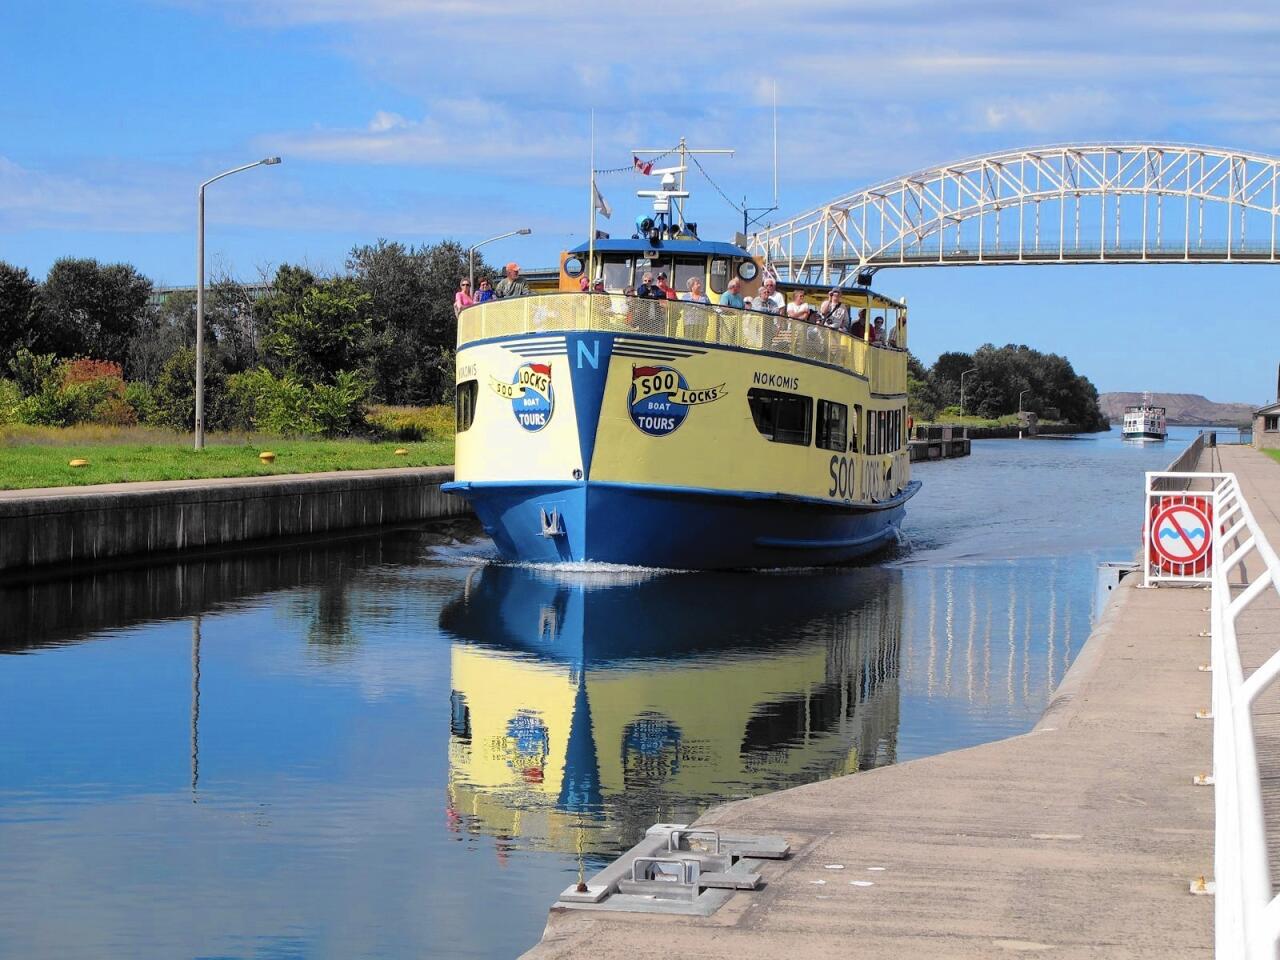 A Soo Locks Boat Tours vessel takes passengers through locks on the St. Marys River.